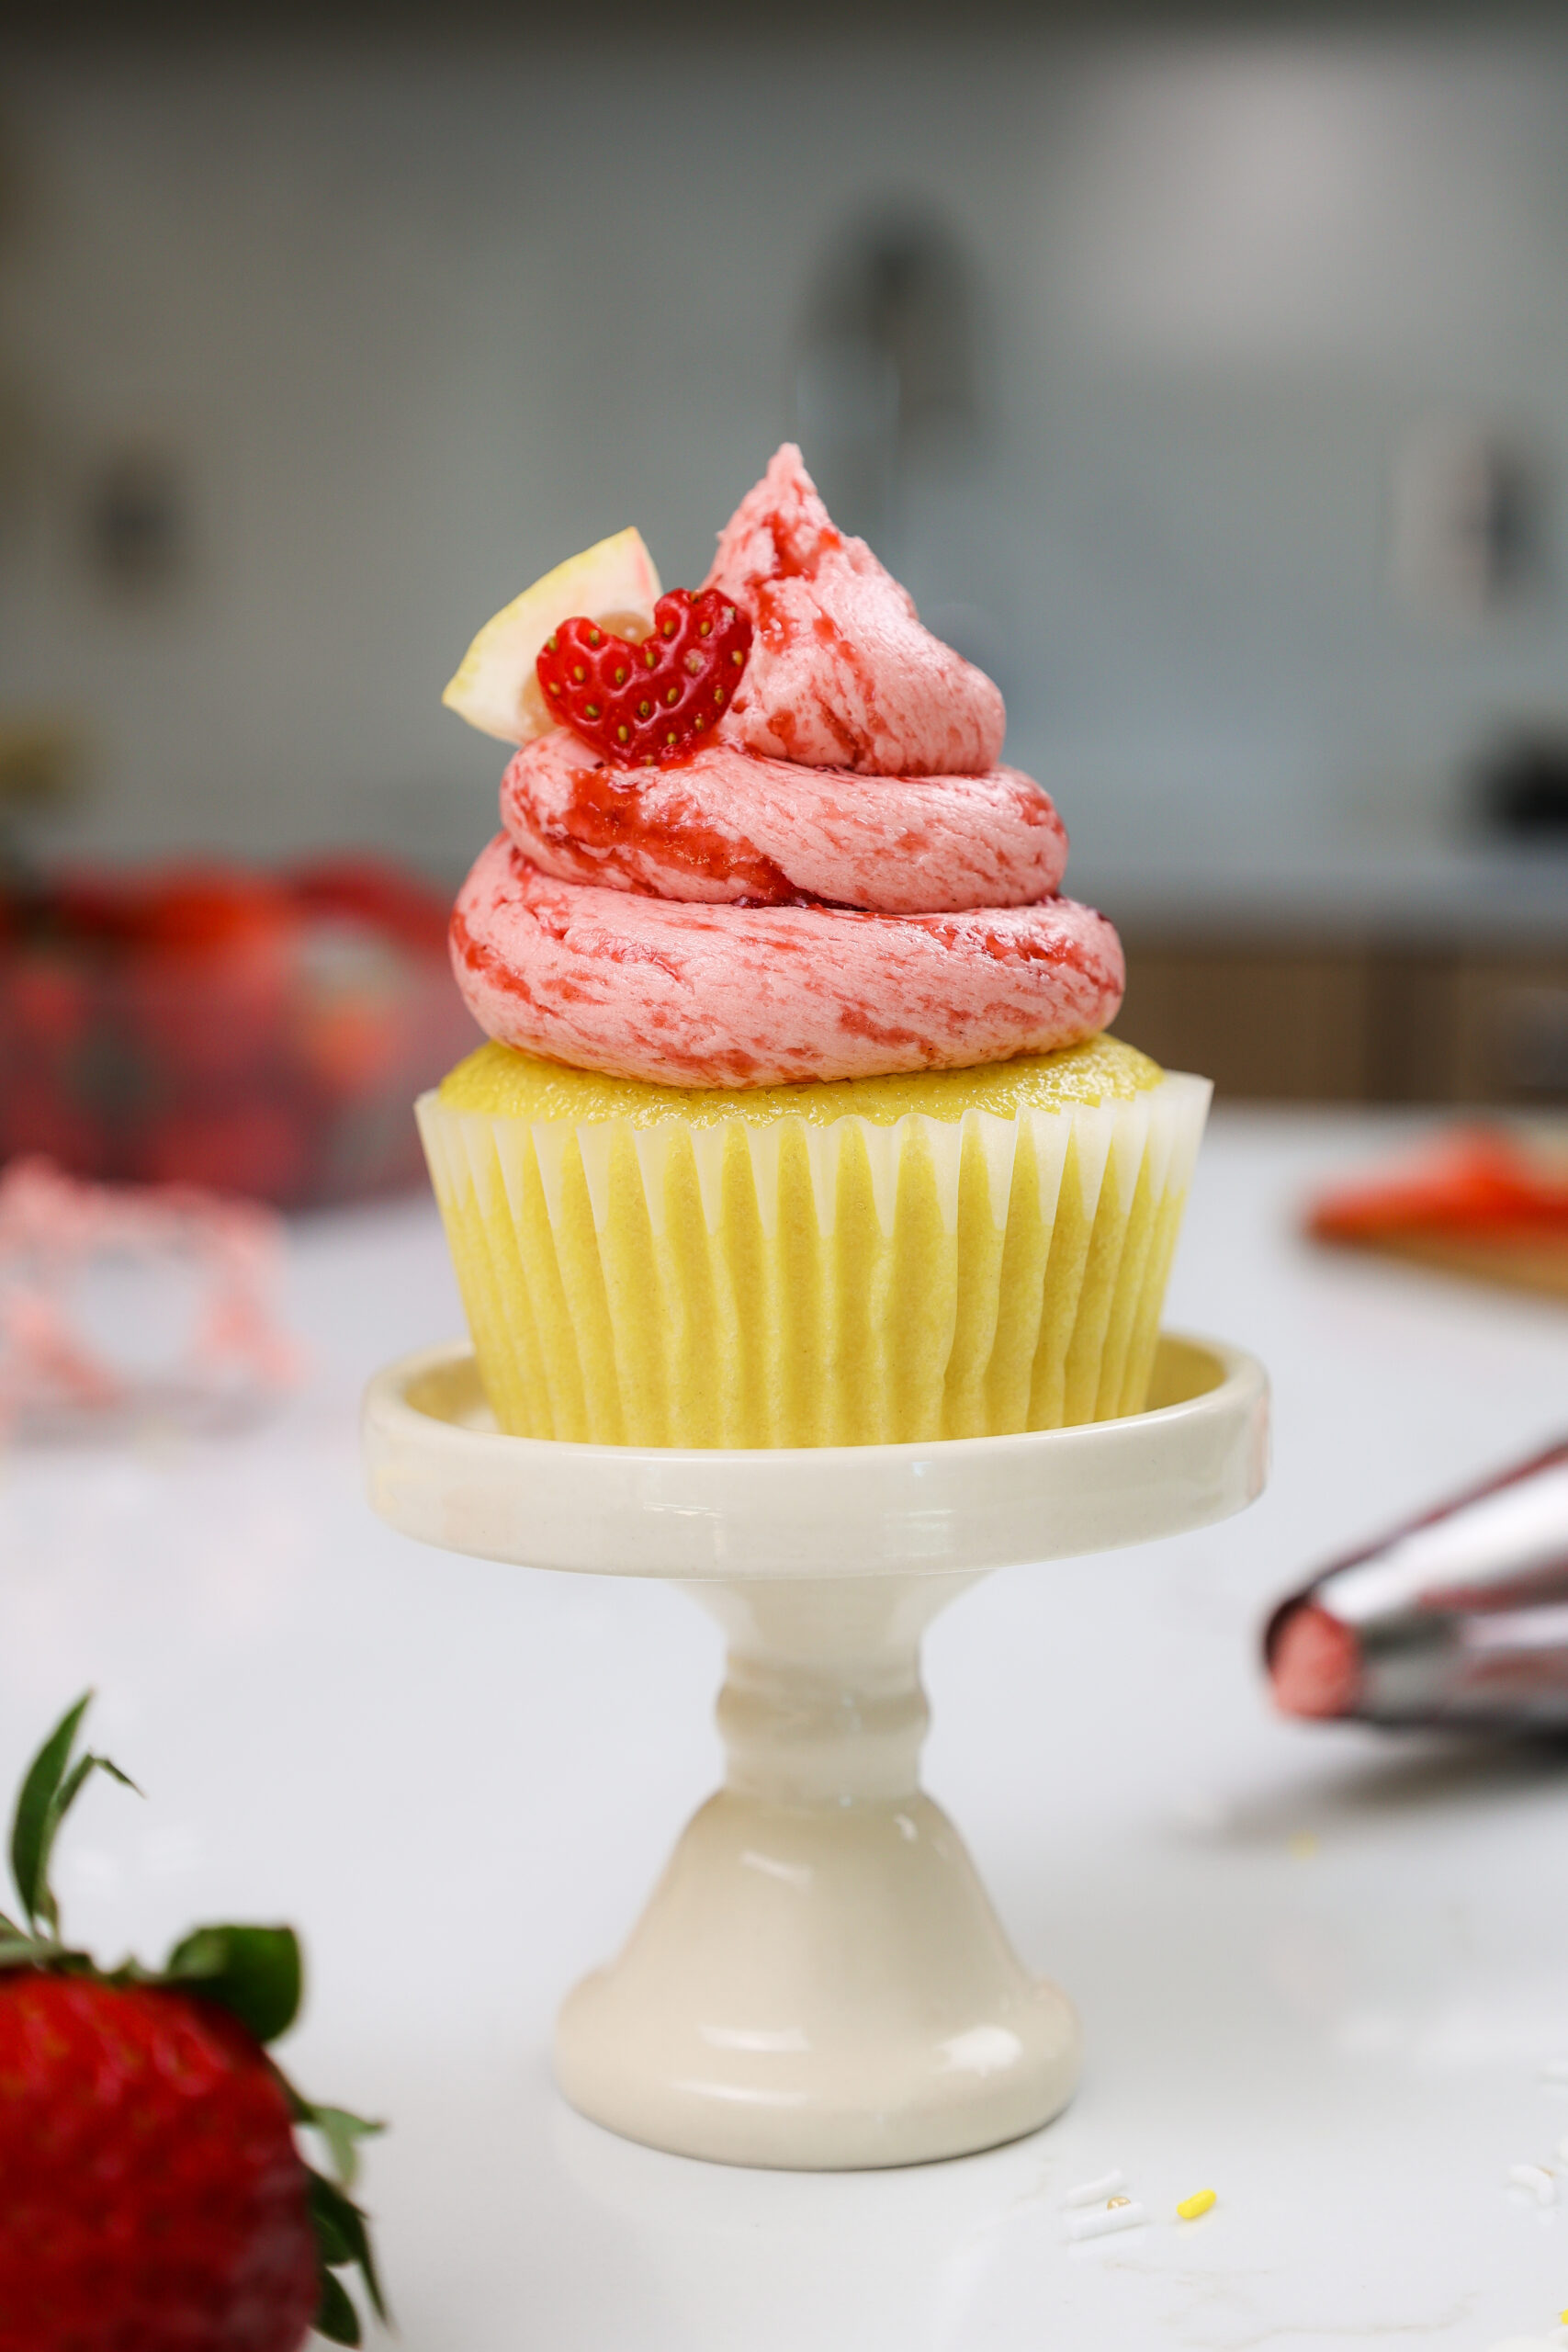 strawberry cupcake recipe from scratch